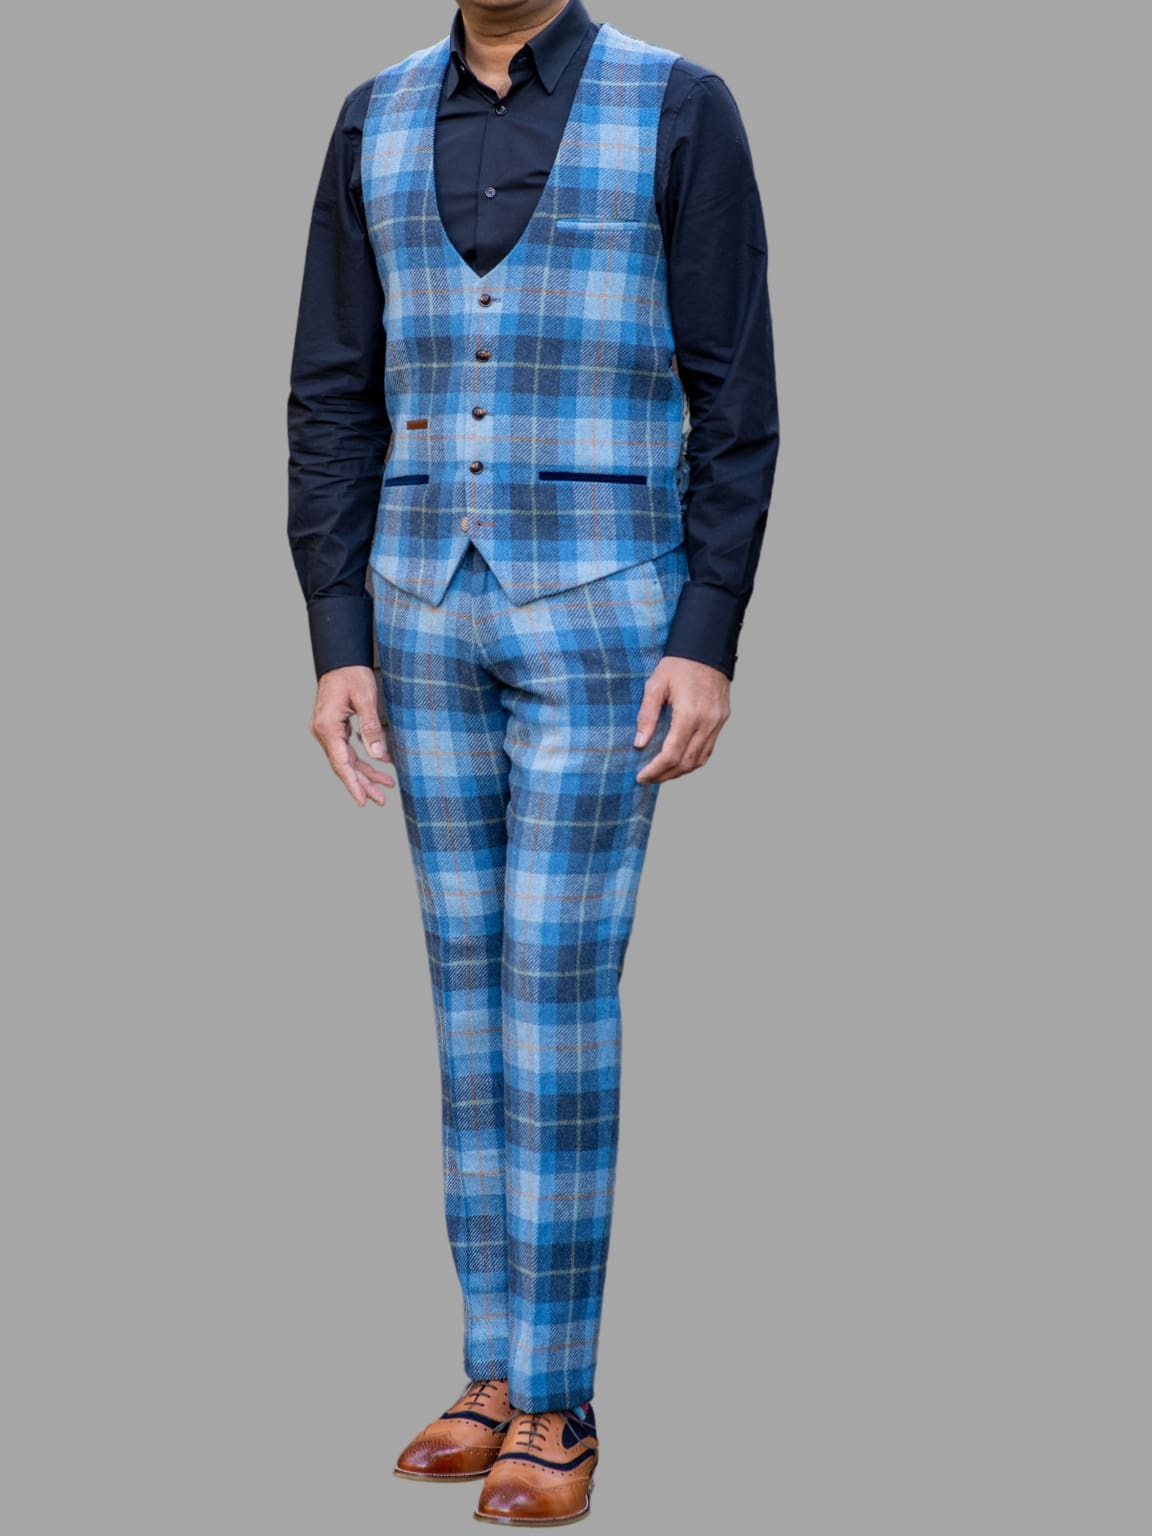 Reece Suit DB Waistcoat Blue Check